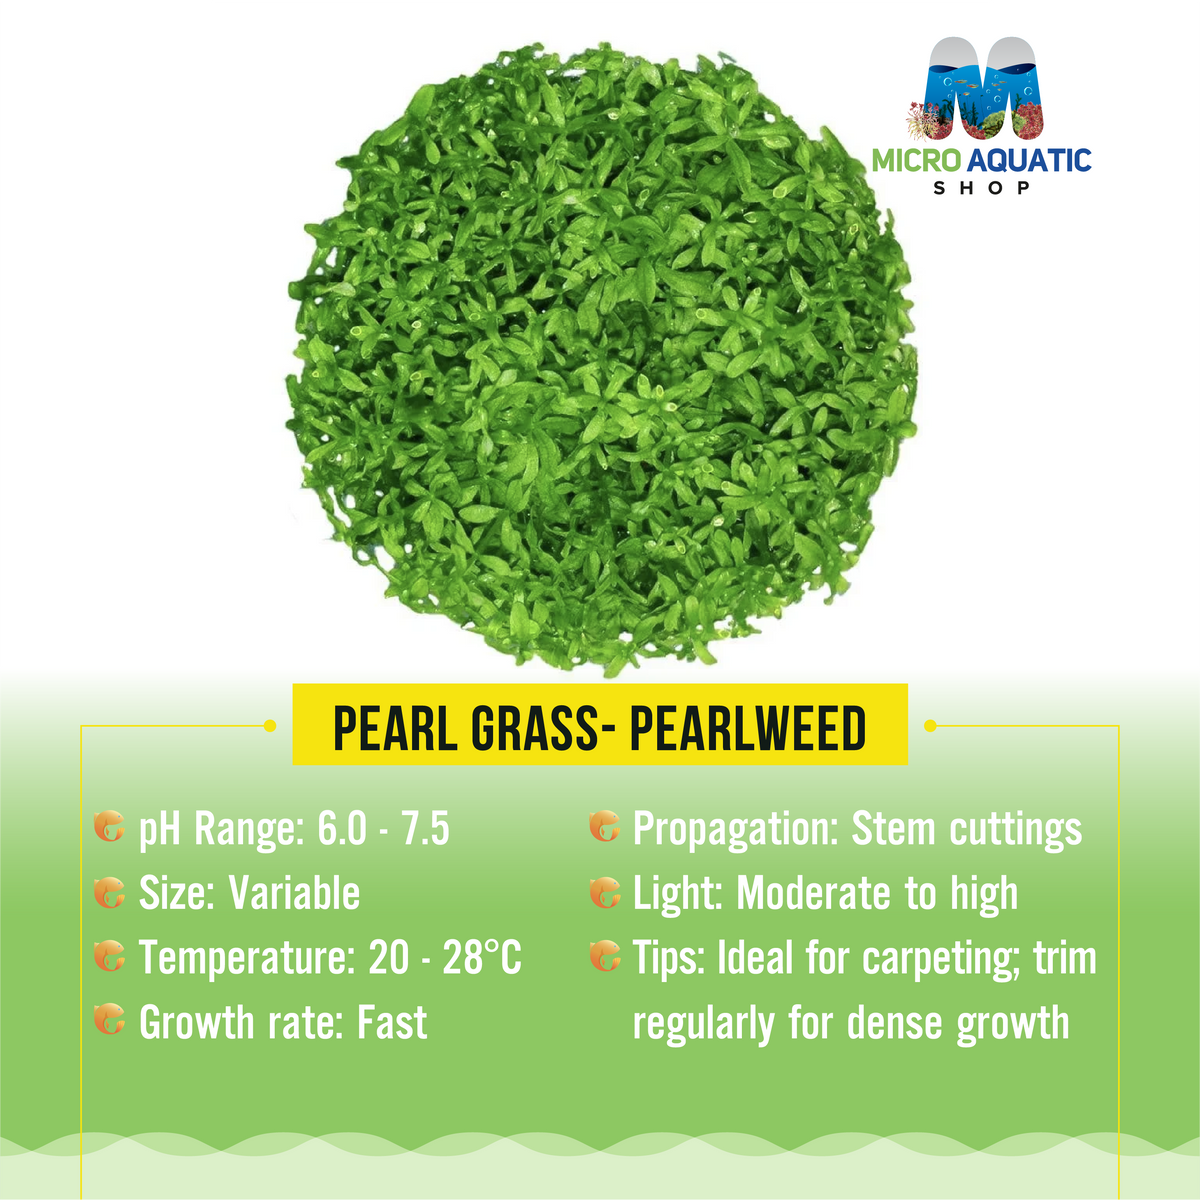 Pearl Grass- Pearlweed